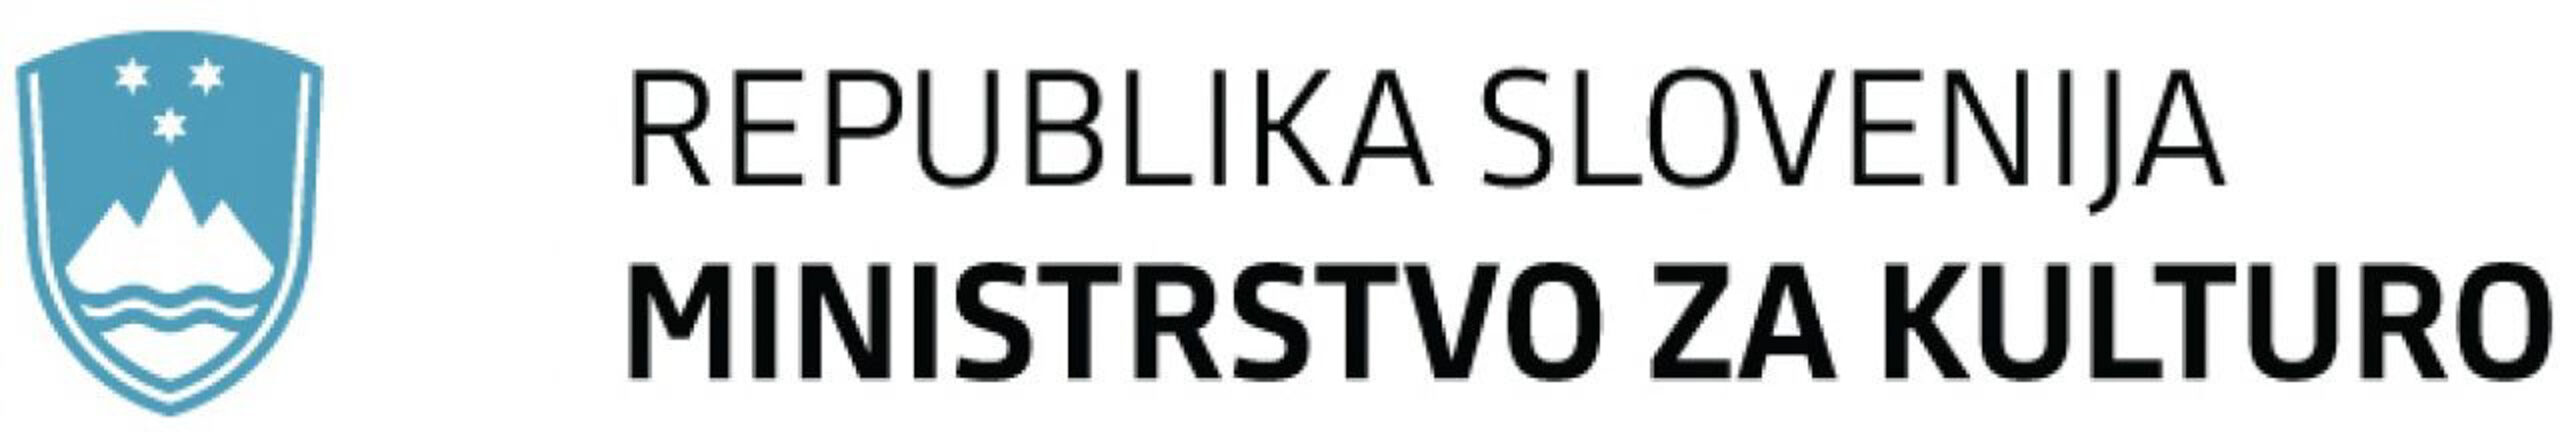 slovenija-jpg